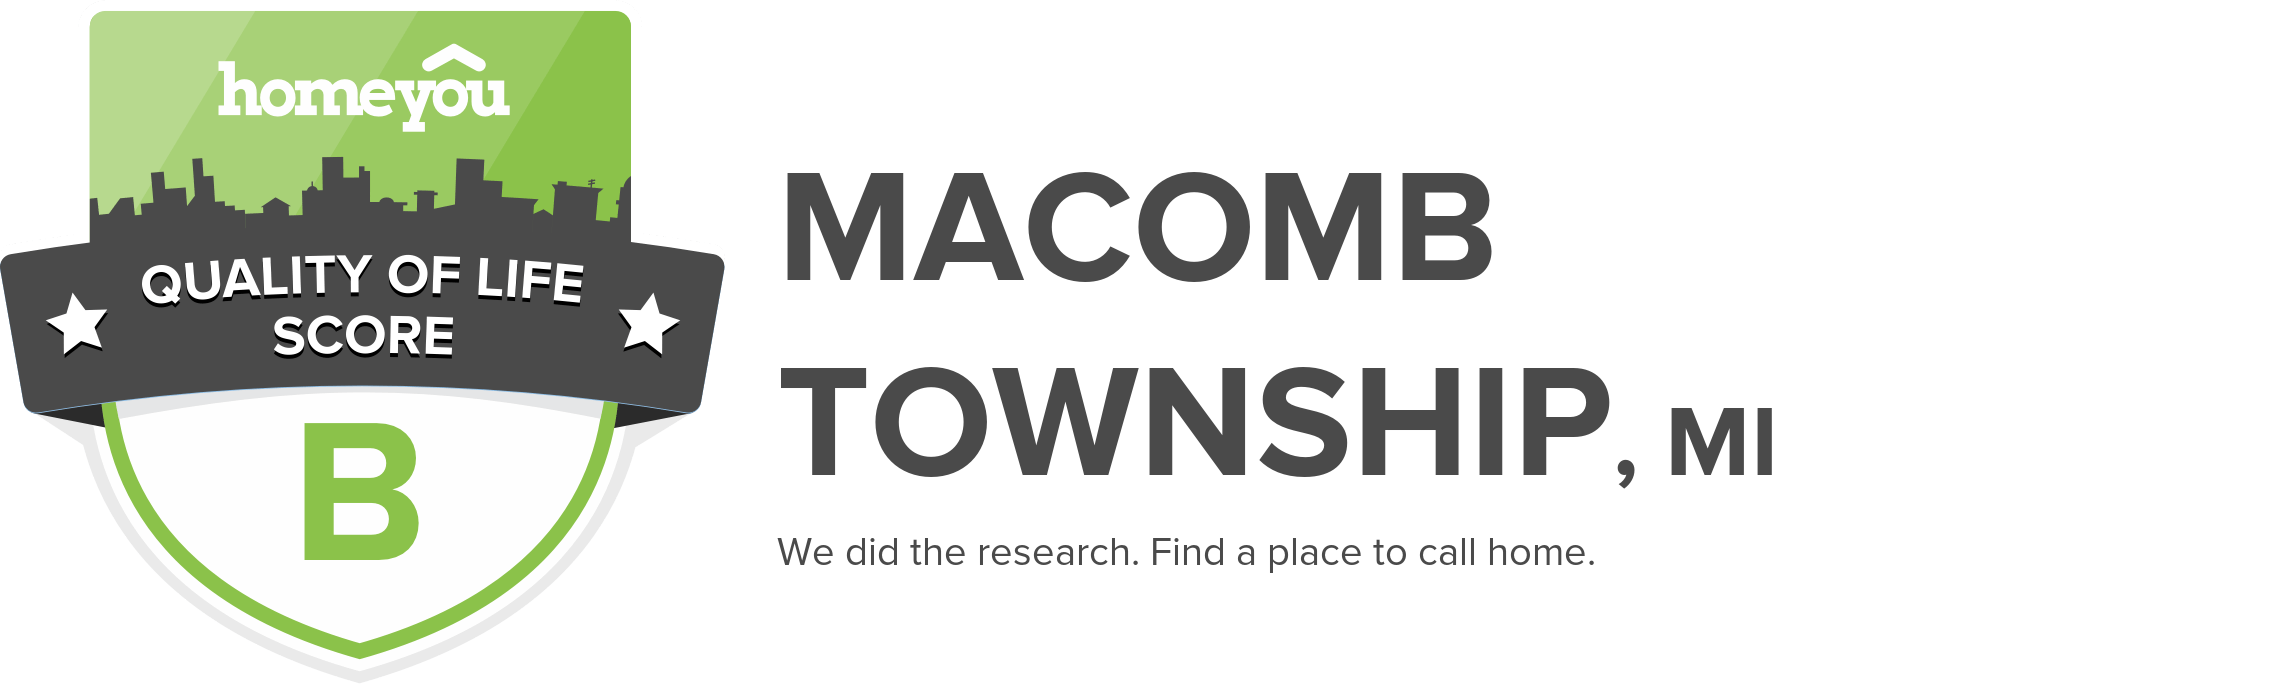 Macomb township, MI